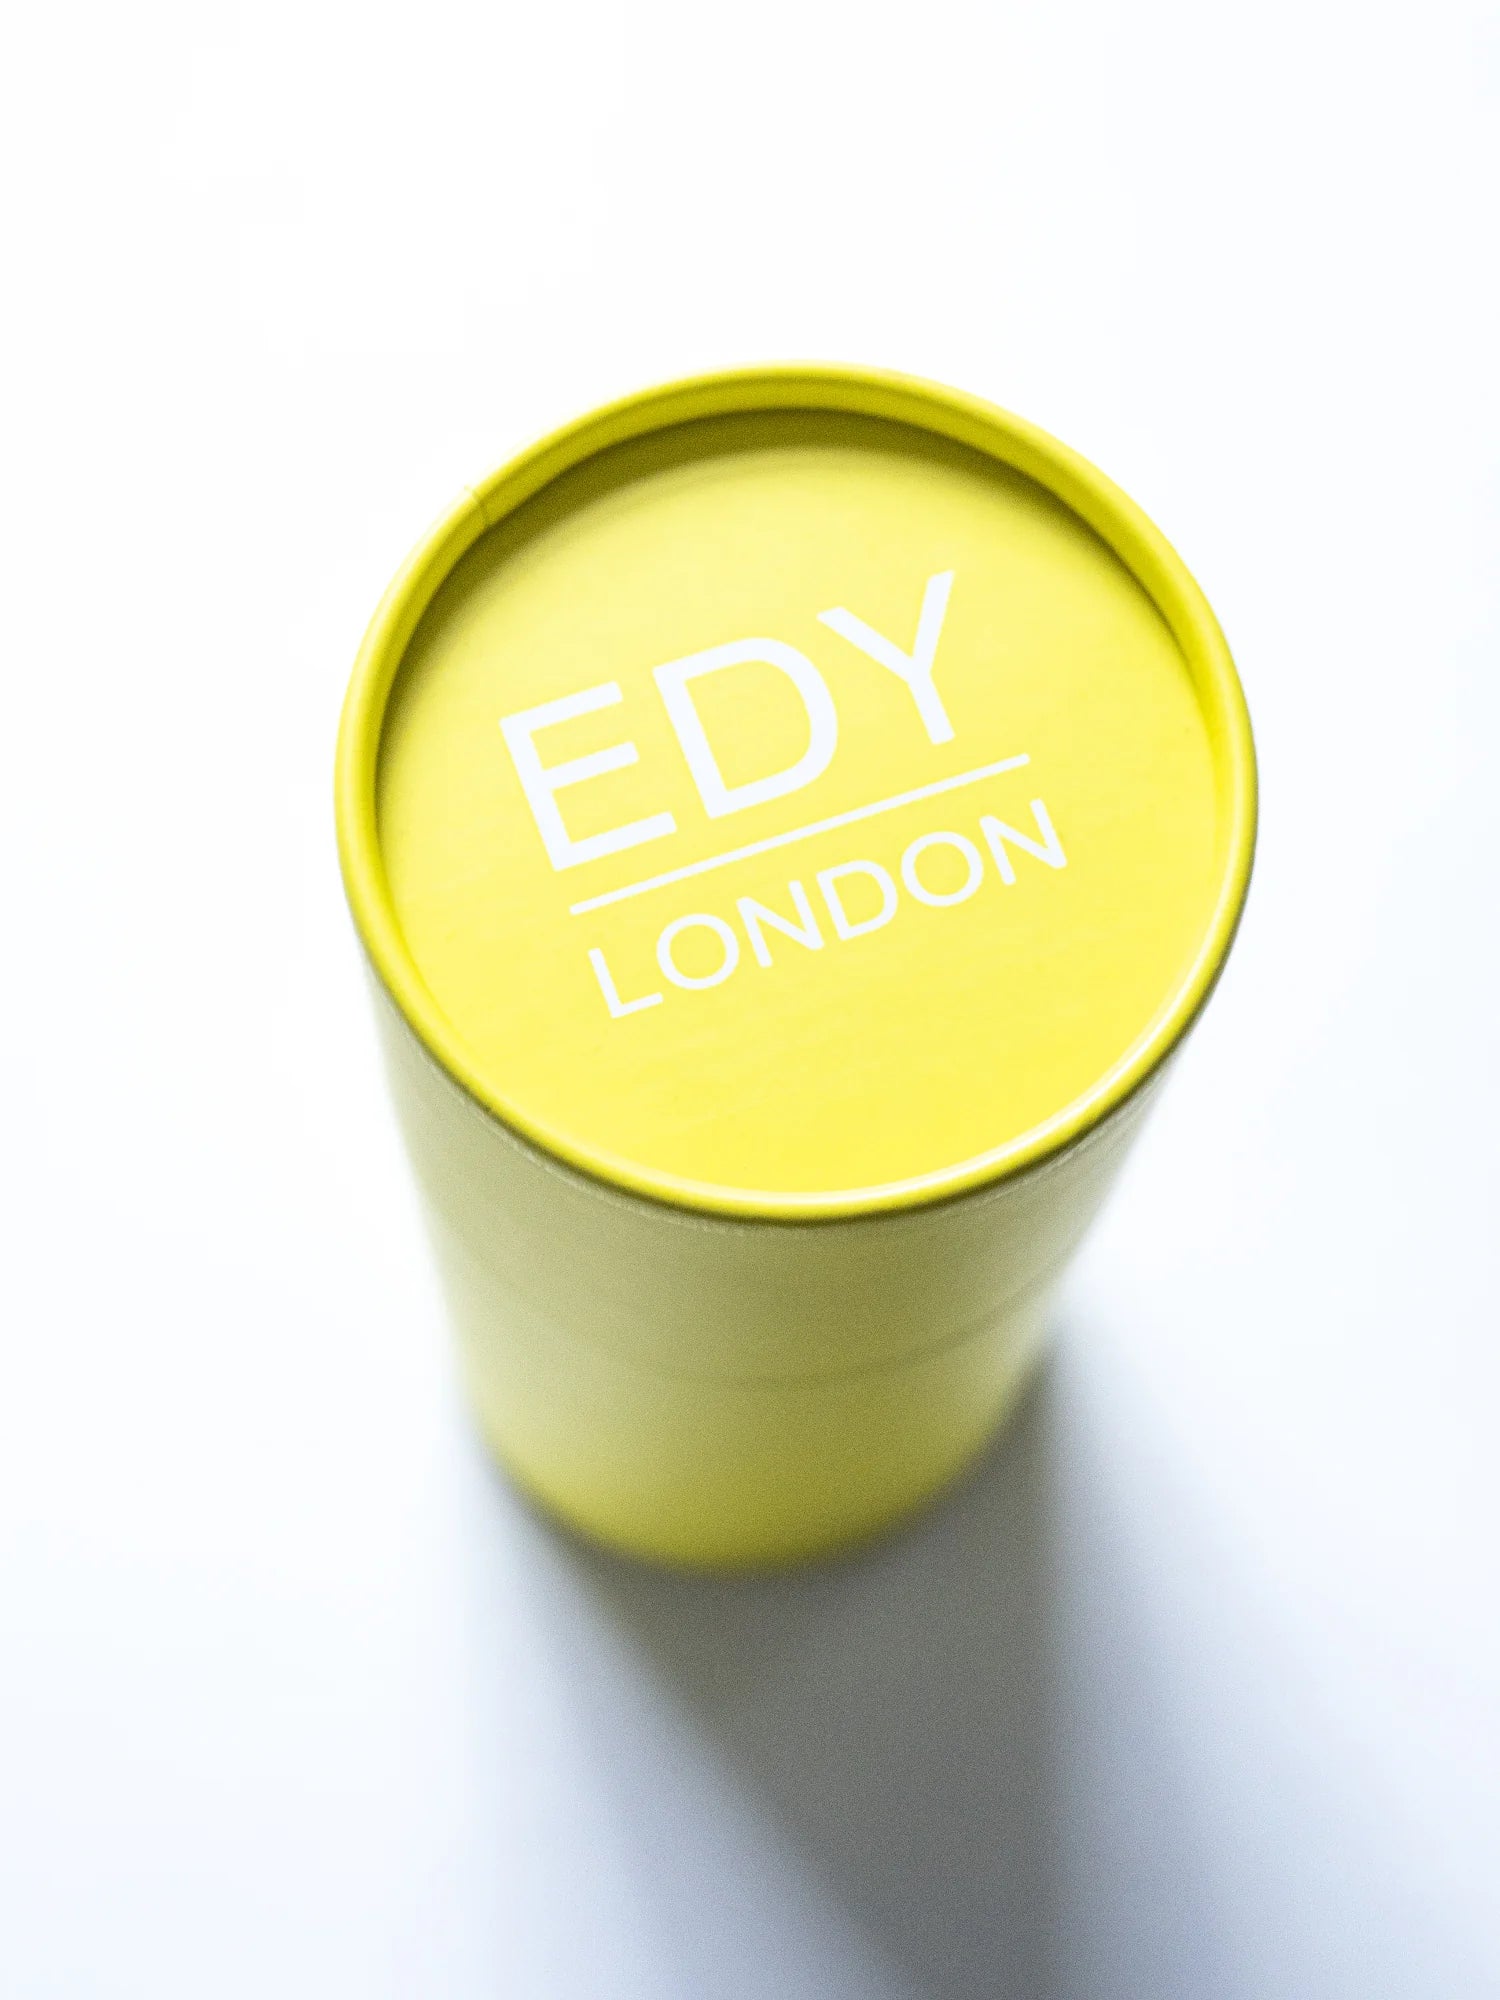 Like A Pro Set 511 Make-up Brush EDY LONDON    - EDY LONDON PRODUCTS UK - The Best Makeup Brushes - shop.edy.london